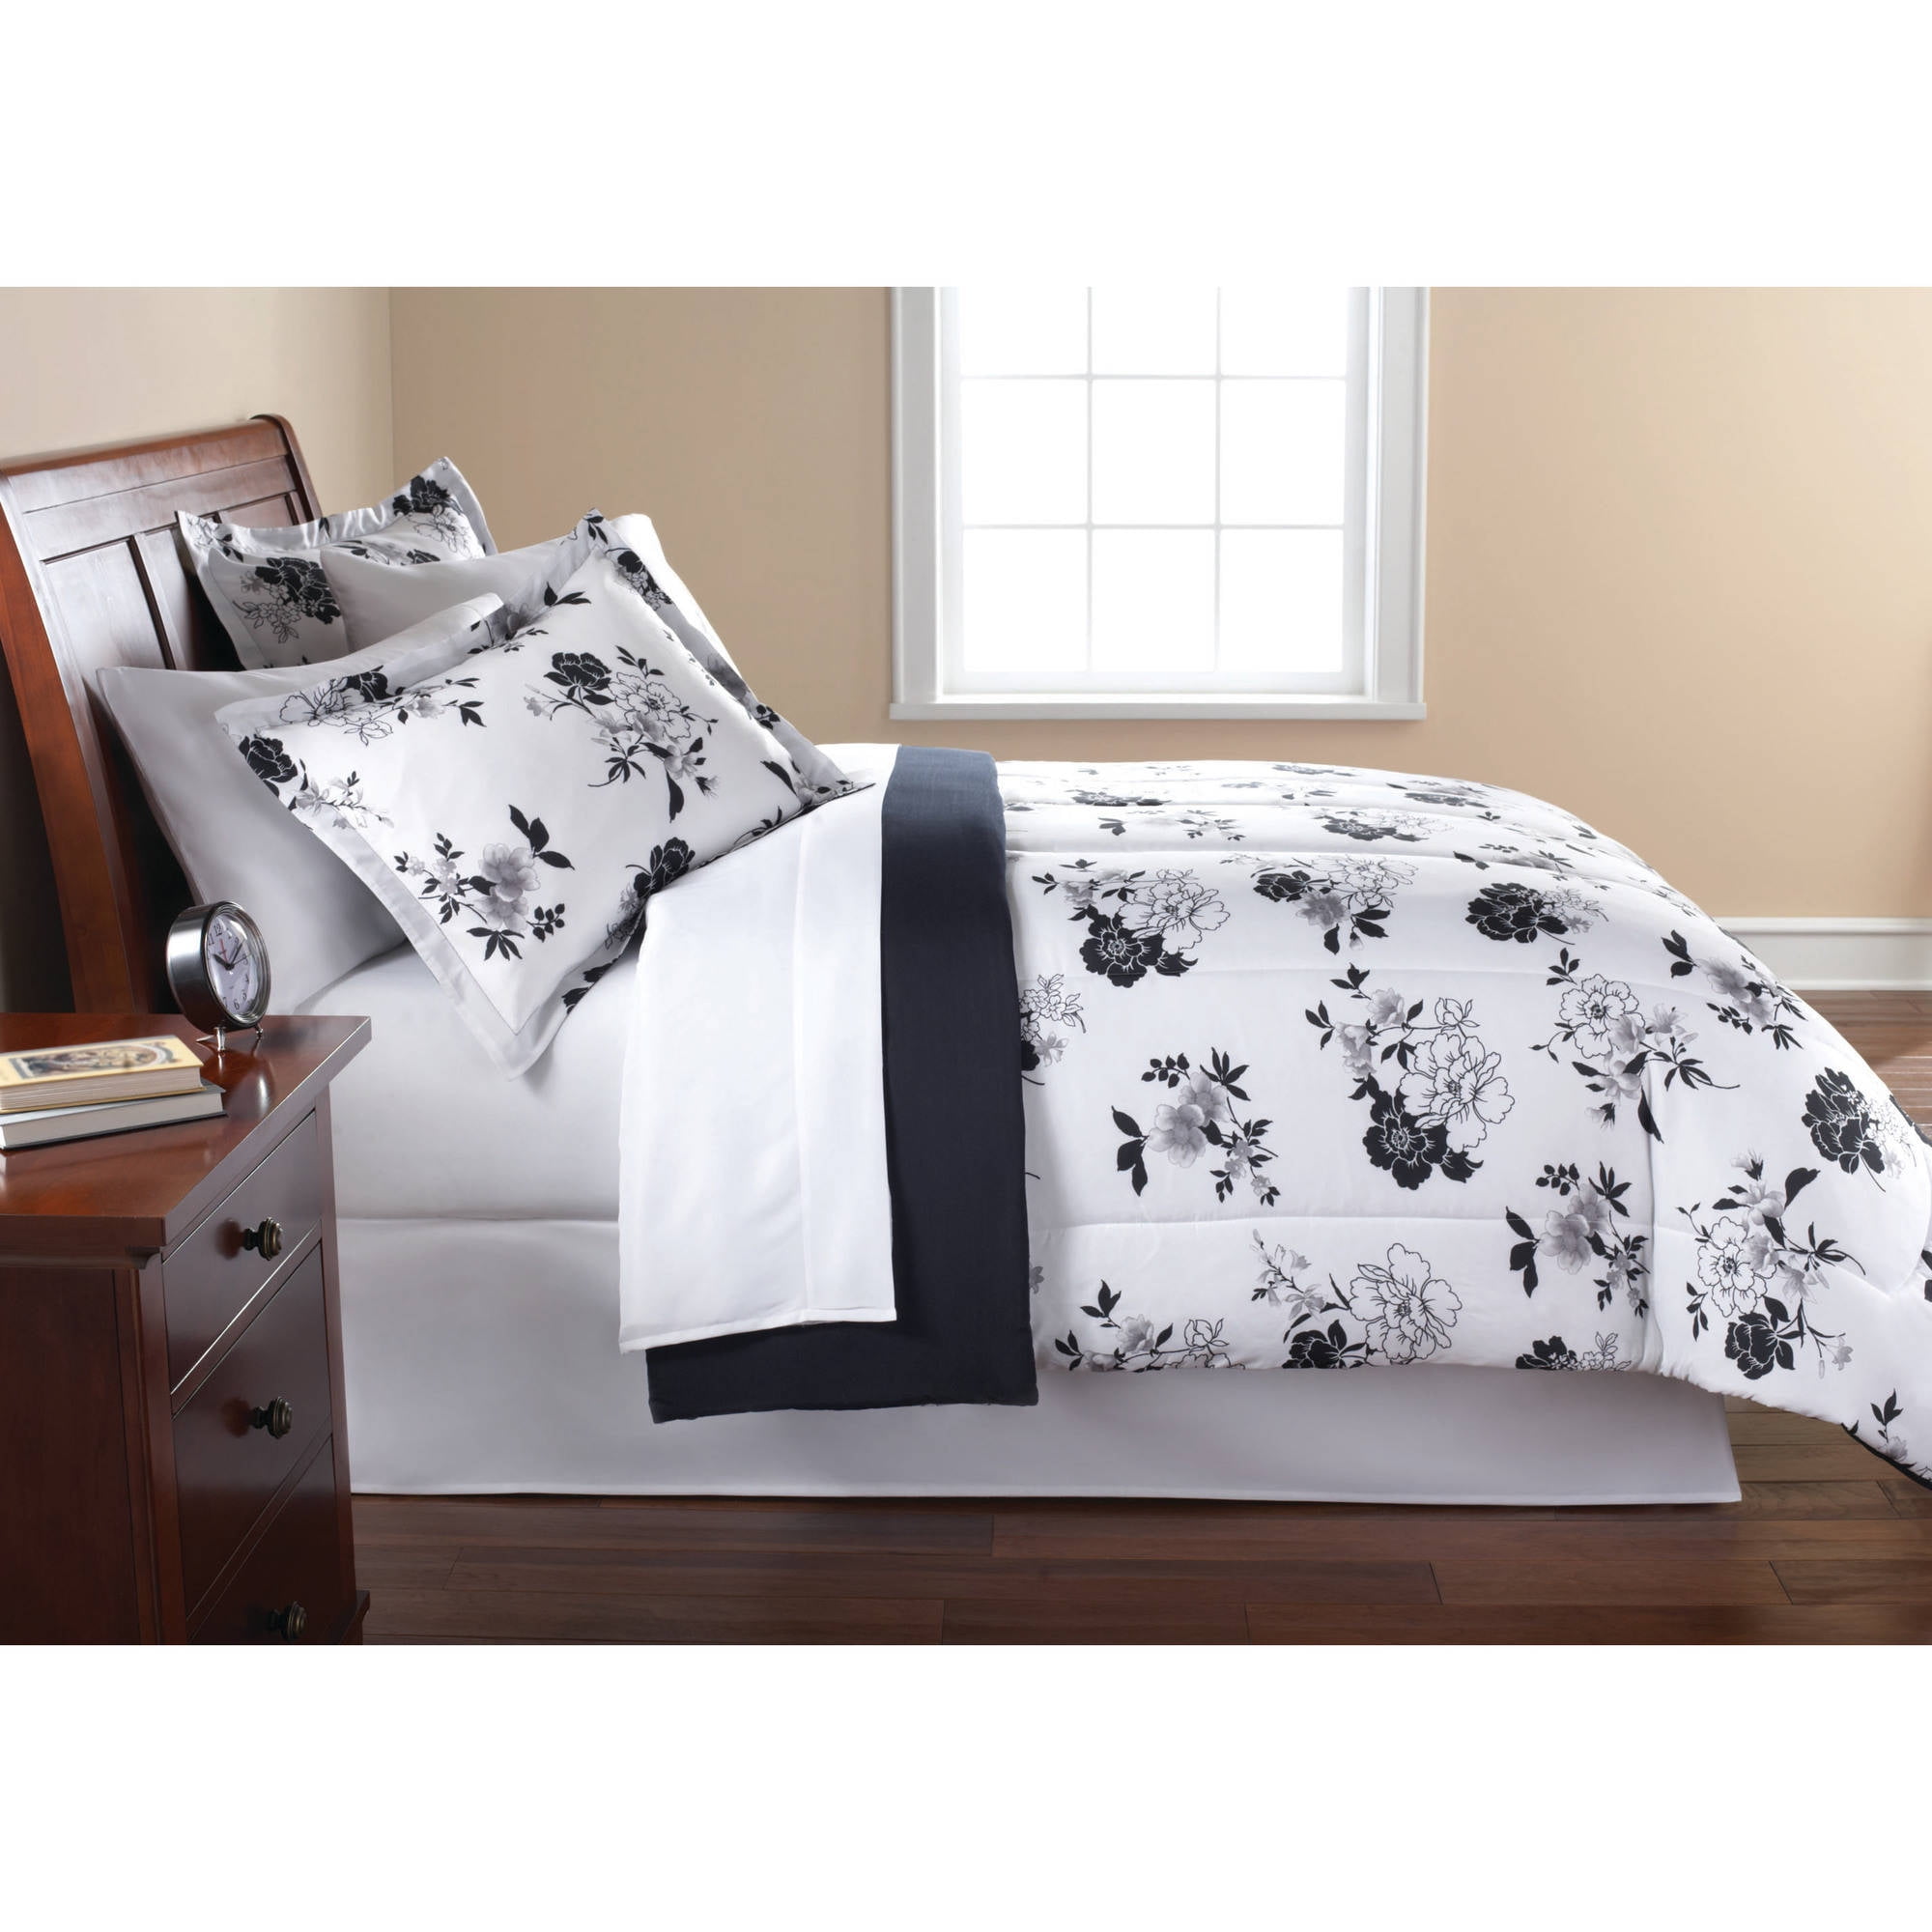 Mainstays Black White Floral Bed In A Bag Comforter Set 1 Each